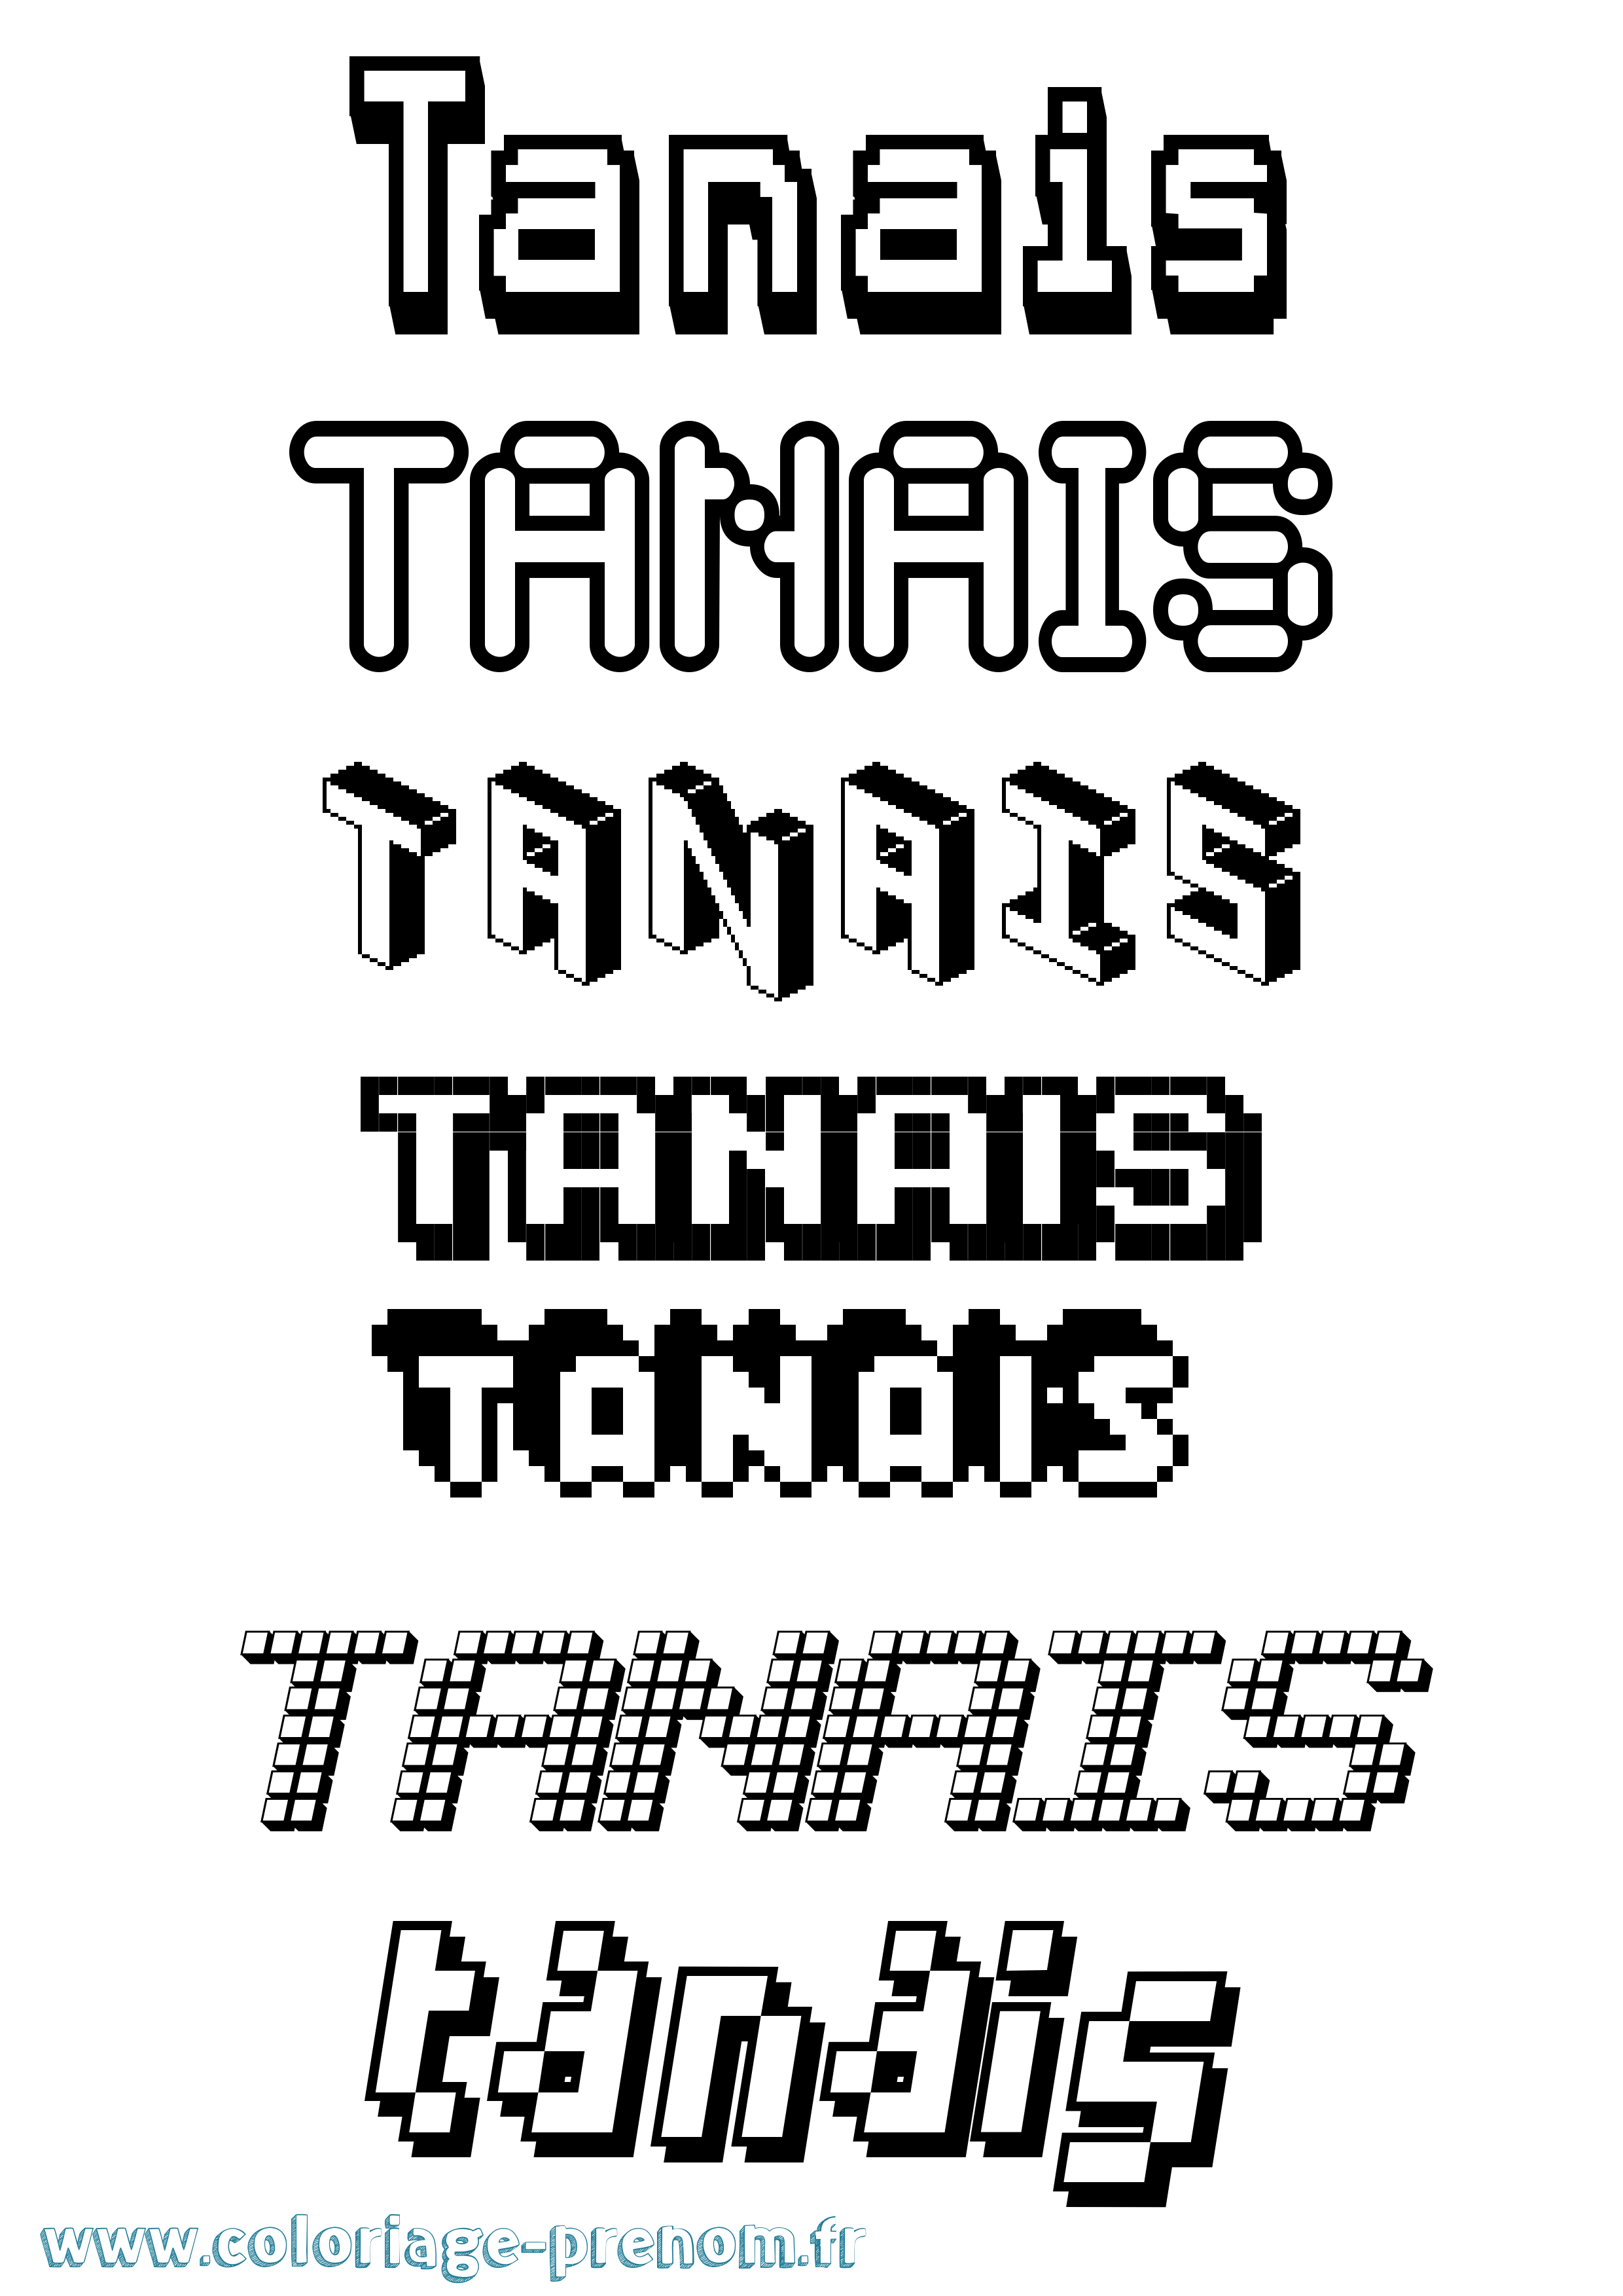 Coloriage prénom Tanais Pixel